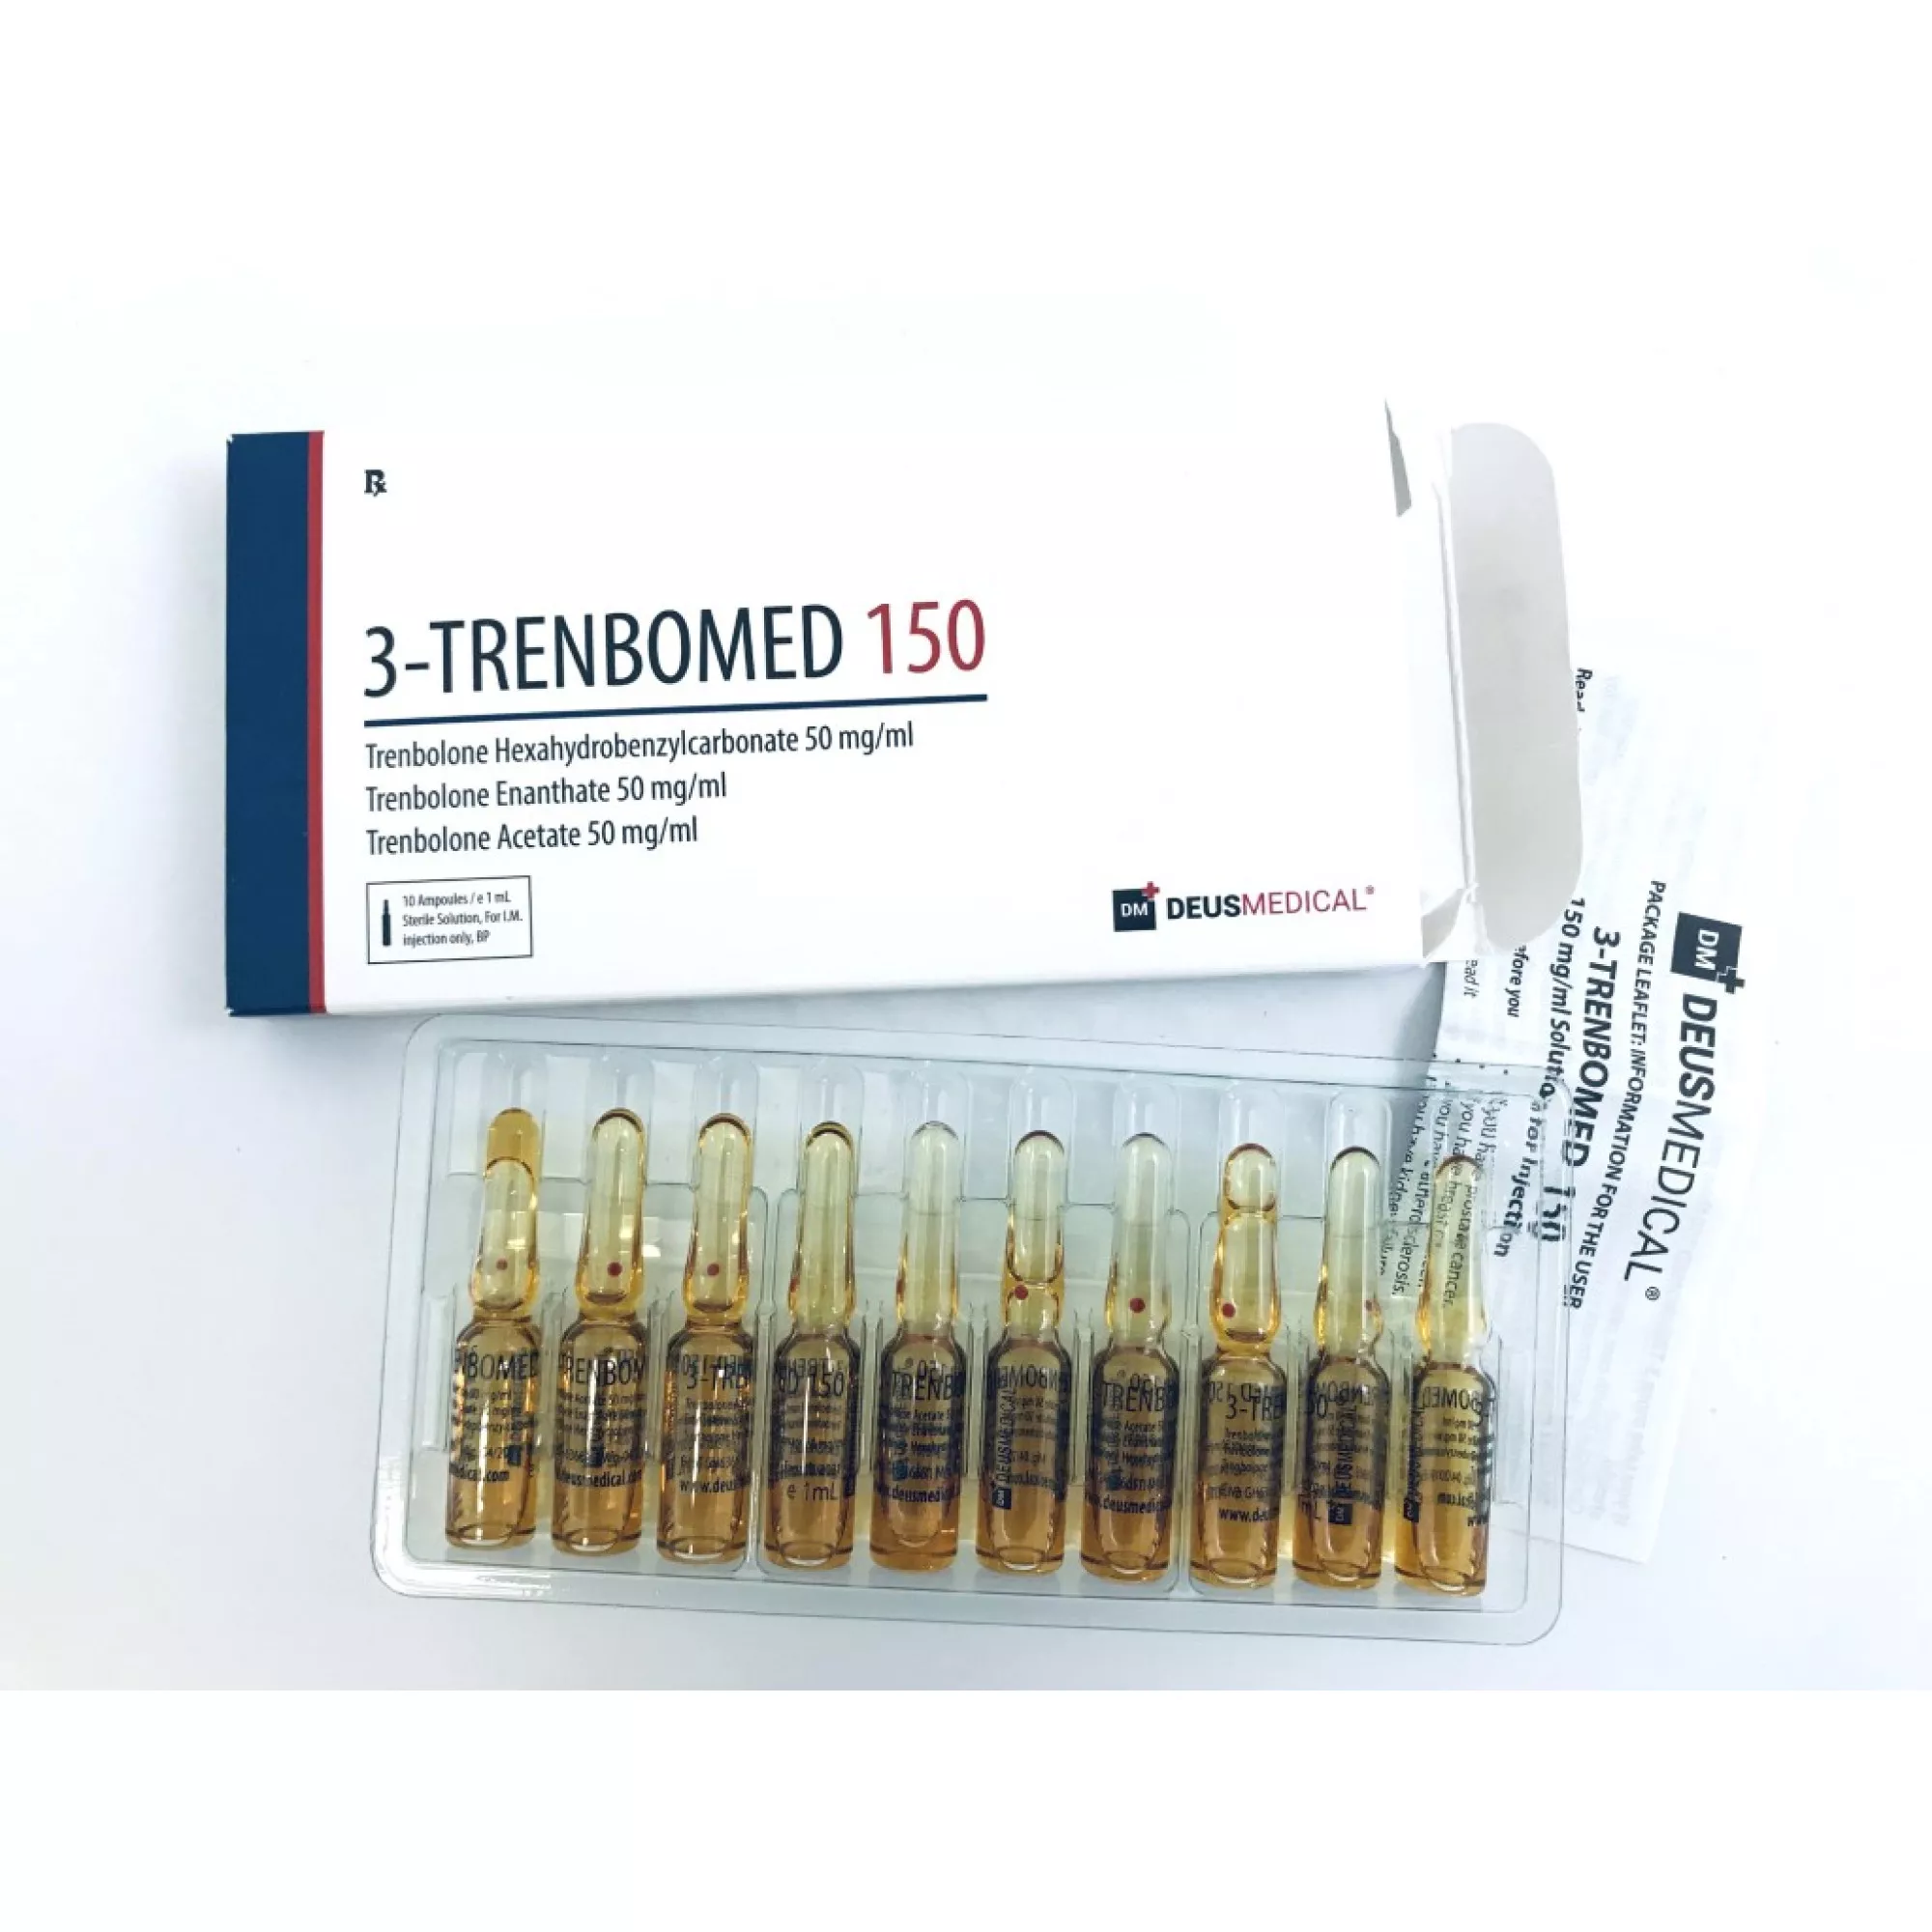 3-TRENBOMED 150 (trenbolonblandning), Deus Medical, köp steroider online - www.deuspower.shop